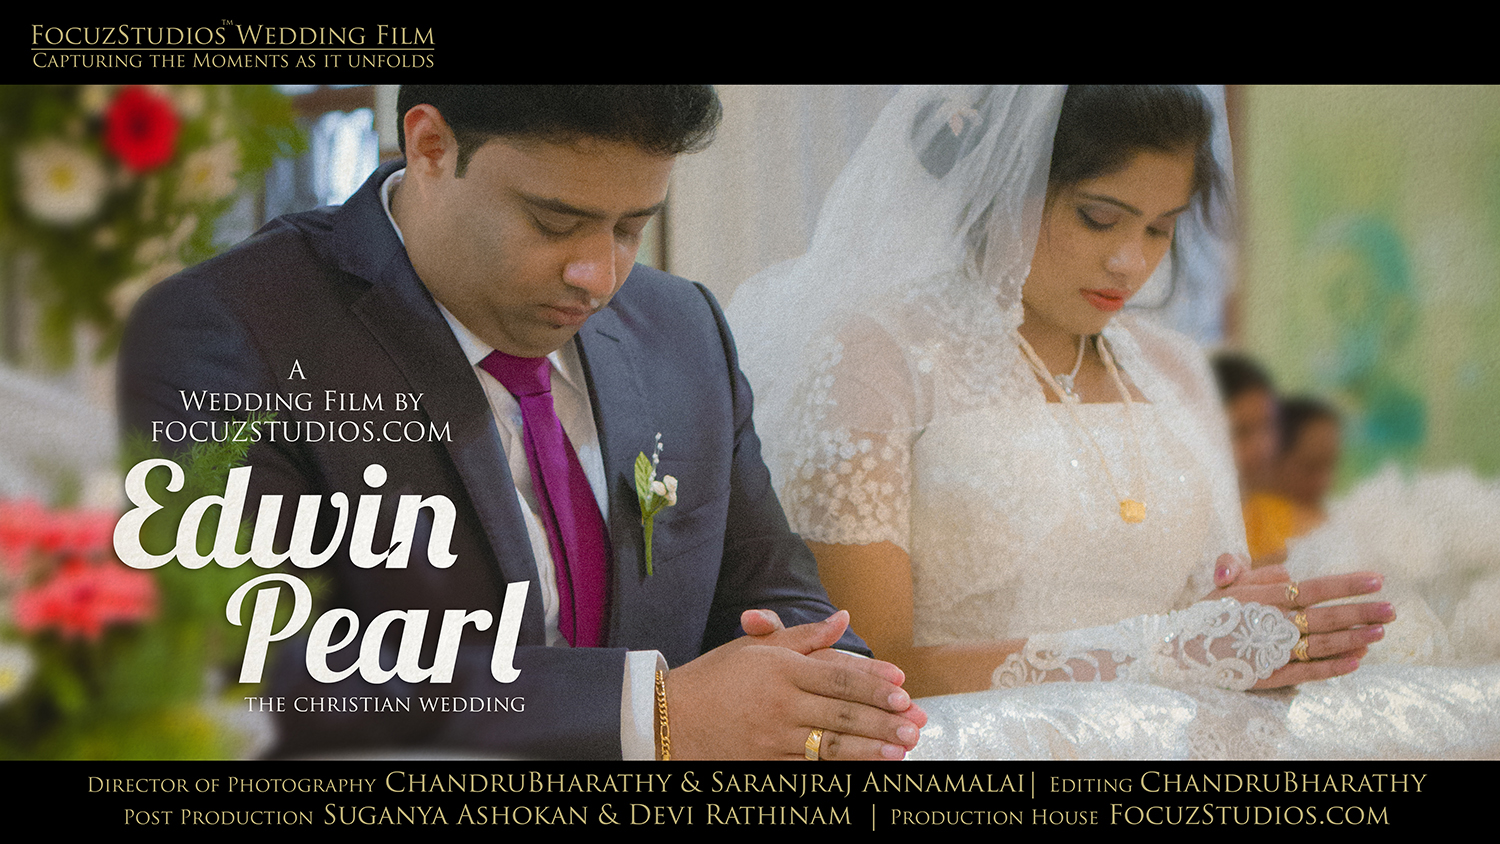 Chennai Christian Wedding Film Video in Tamil Nadu EDWIN and PEARL